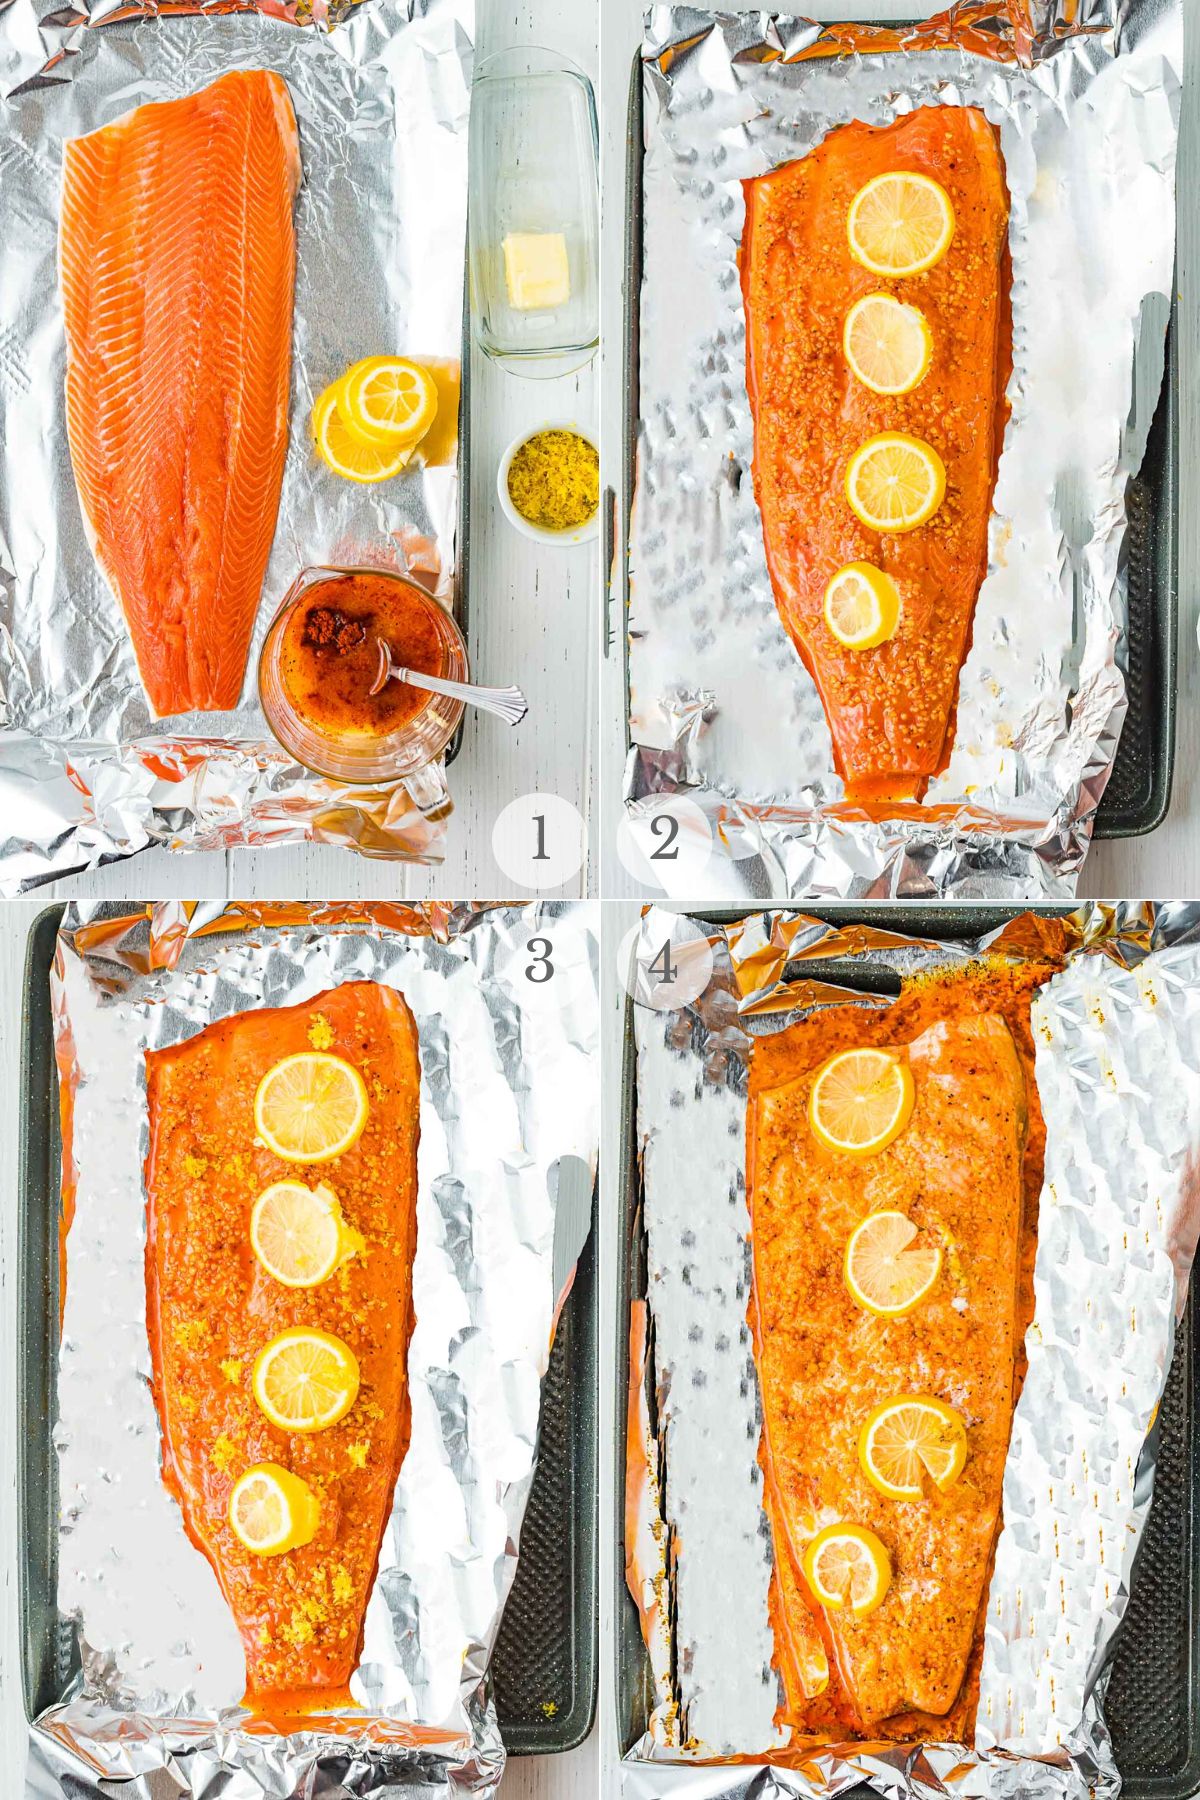 baked salmon recipe steps 1-4.